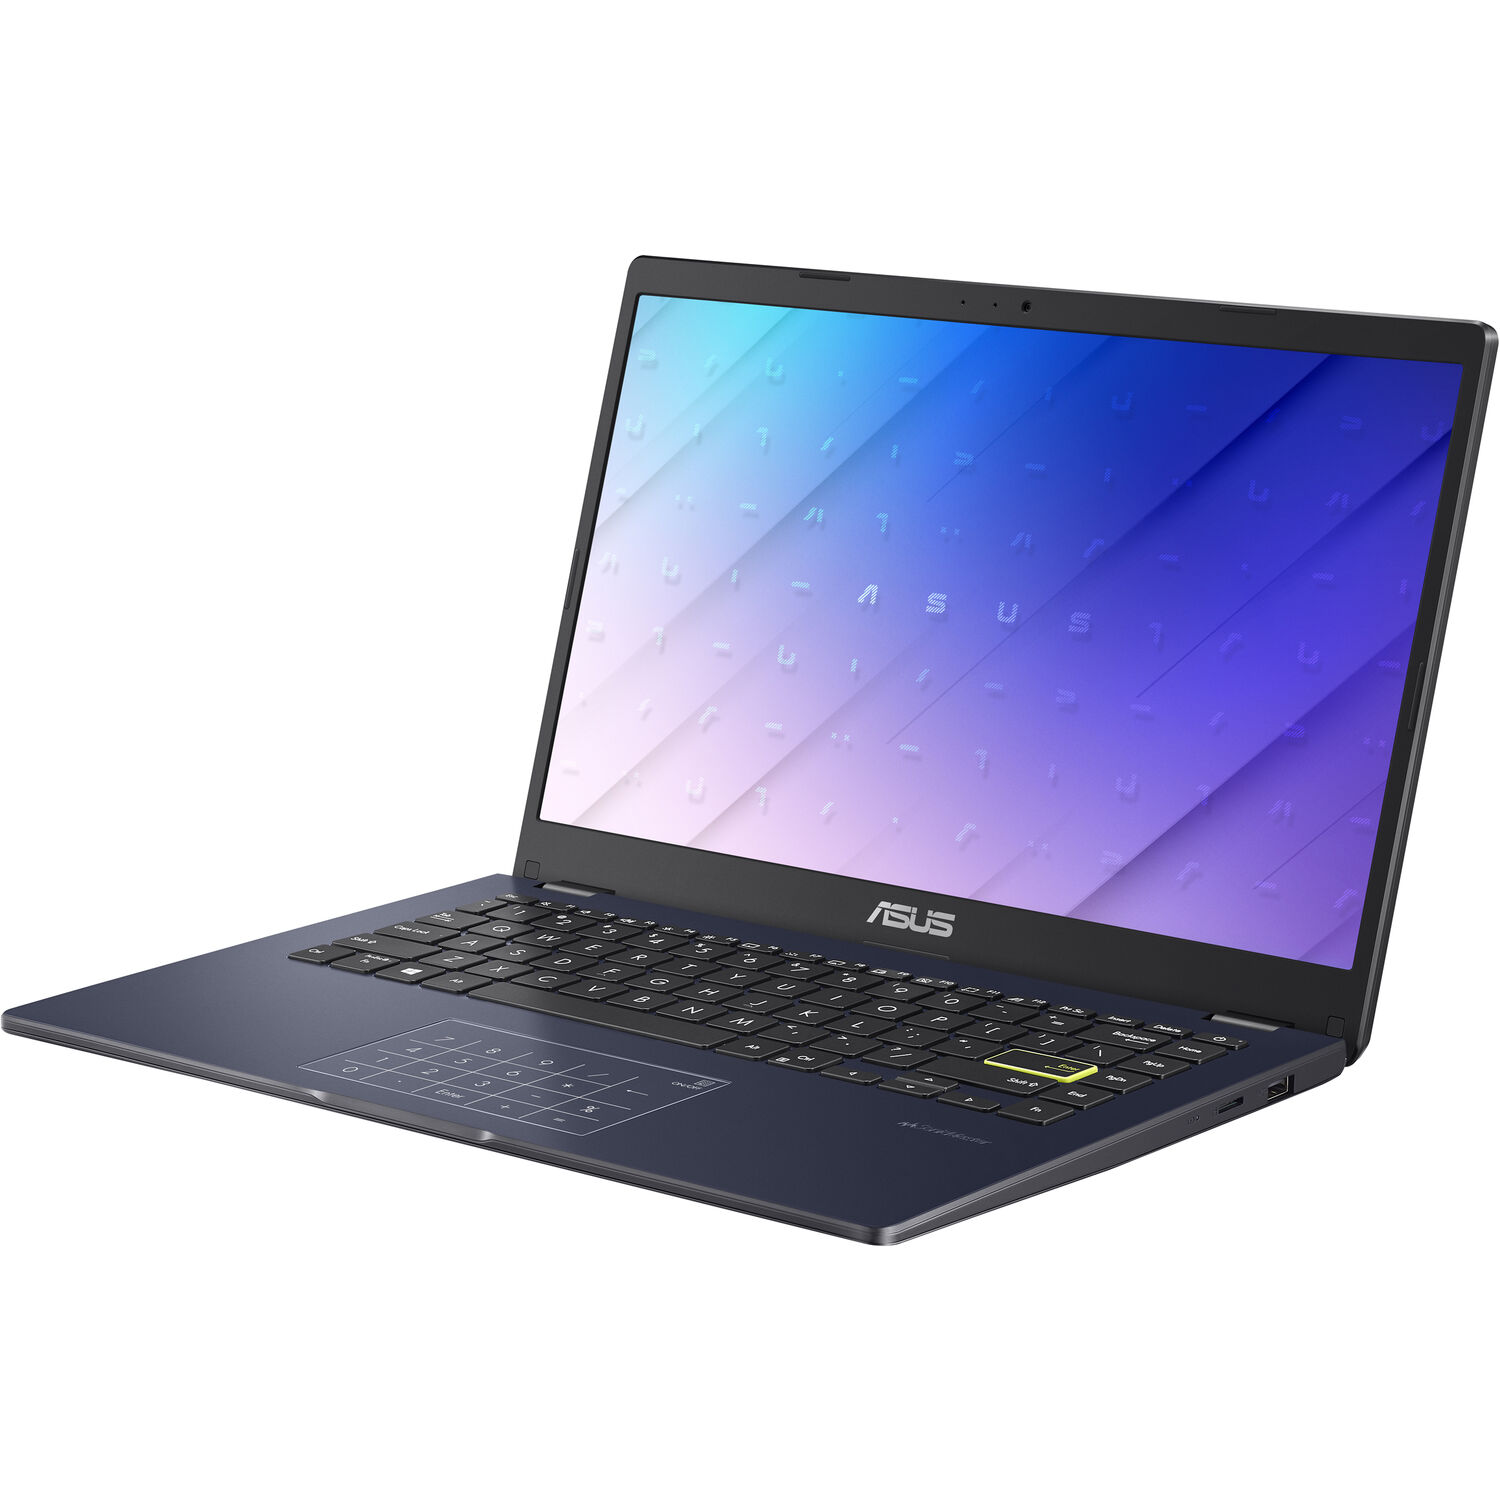 ASUS 14 L410 Everyday Value Laptop (Intel Celeron N4020 2-Core, 4GB RAM, 128GB PCIe SSD, 14.0" Full HD (1920x1080), Intel UHD 600, Wifi, Bluetooth, Webcam, 1xUSB 3.2, 1xHDMI, Win 10 Home) - image 4 of 6